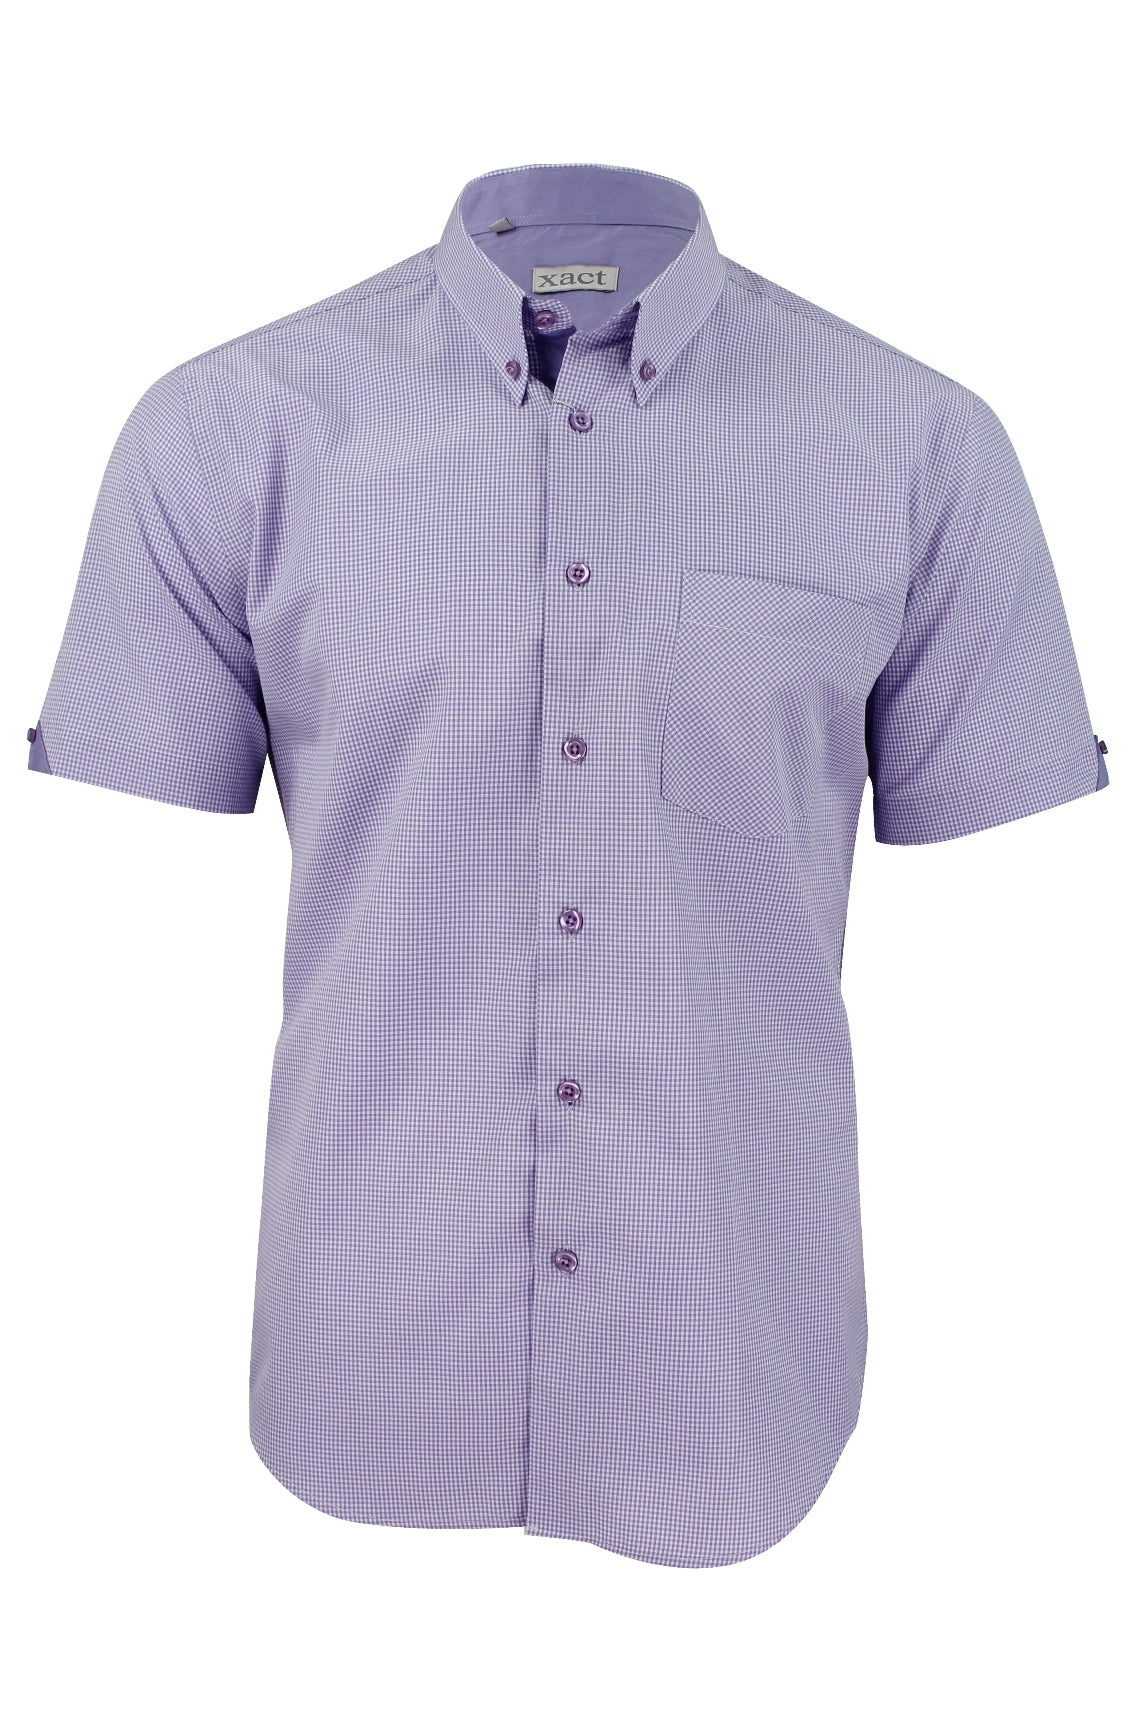 Mens Short Sleeved Shirt by Xact Clothing Micro Gingham Check, 01, 1510114, Lilac